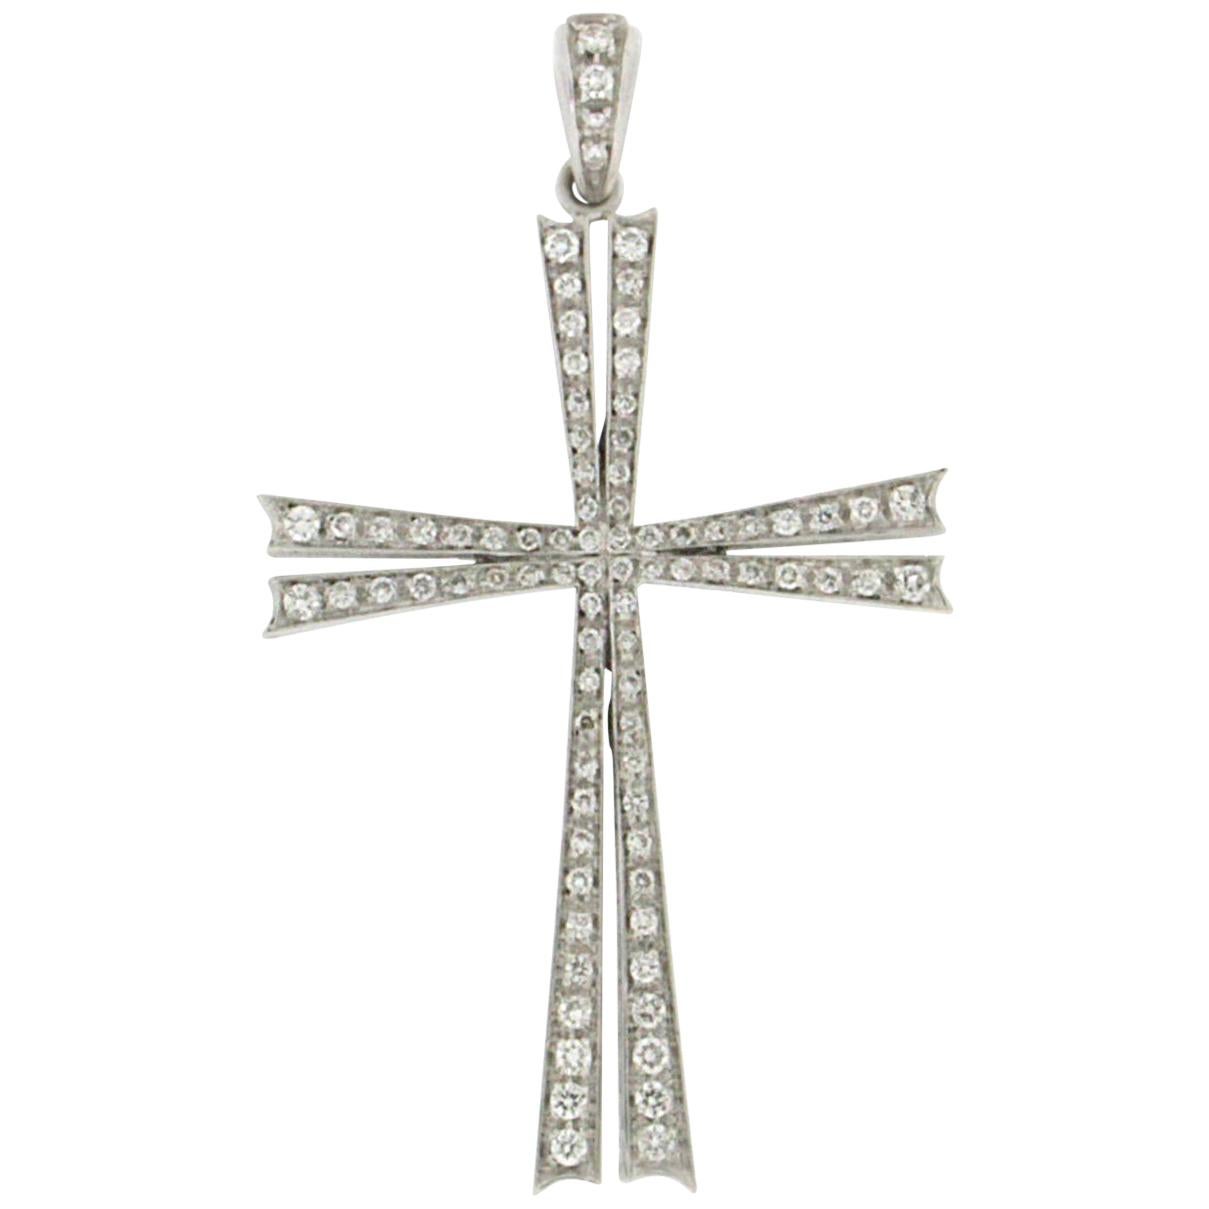 Handcraft Cross 18 Karat White Gold Diamonds Pendant Necklace